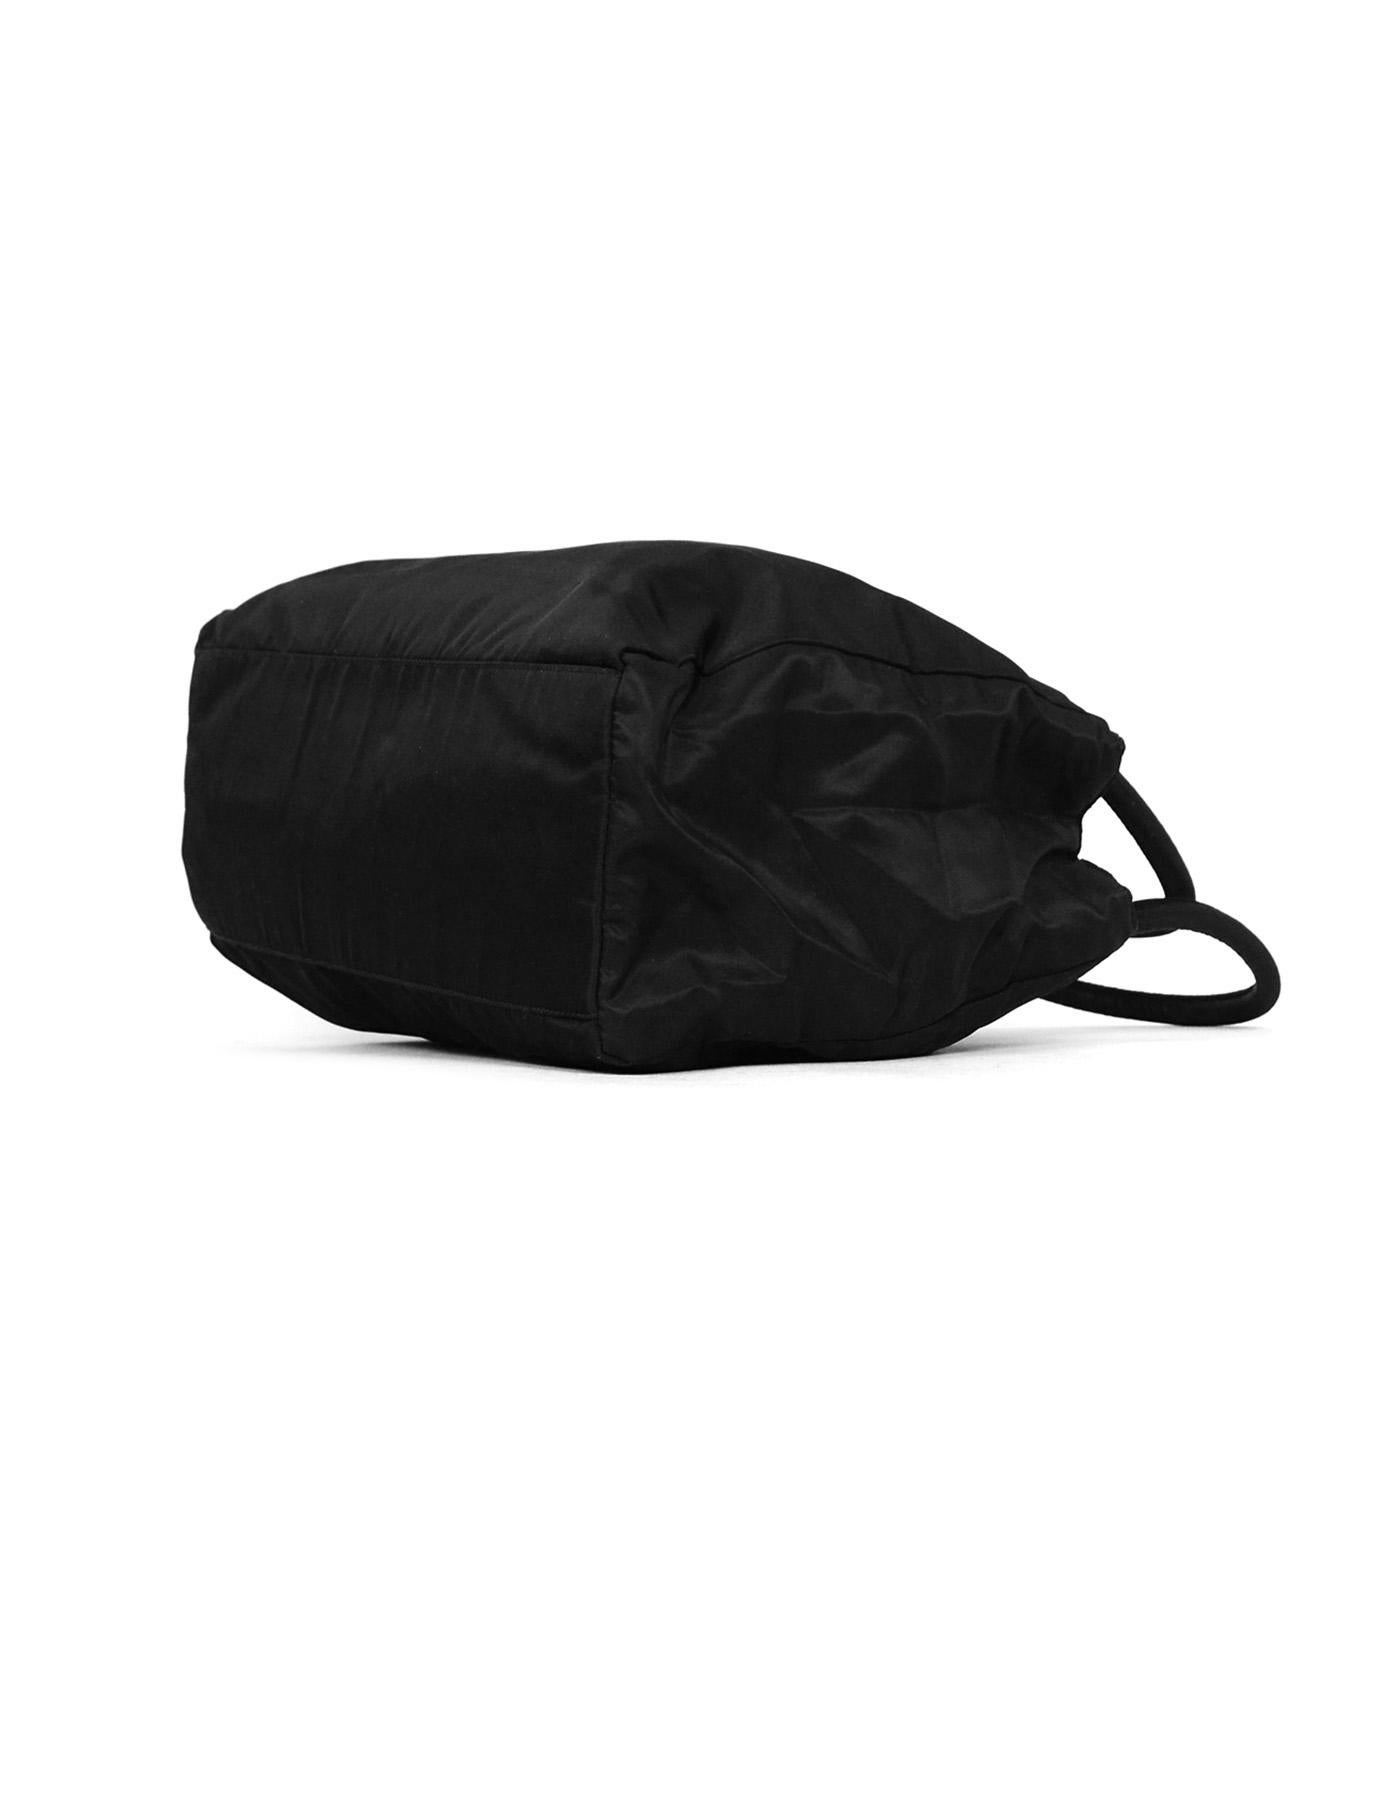 Women's Prada Black Nylon Double Strap Tote Bag